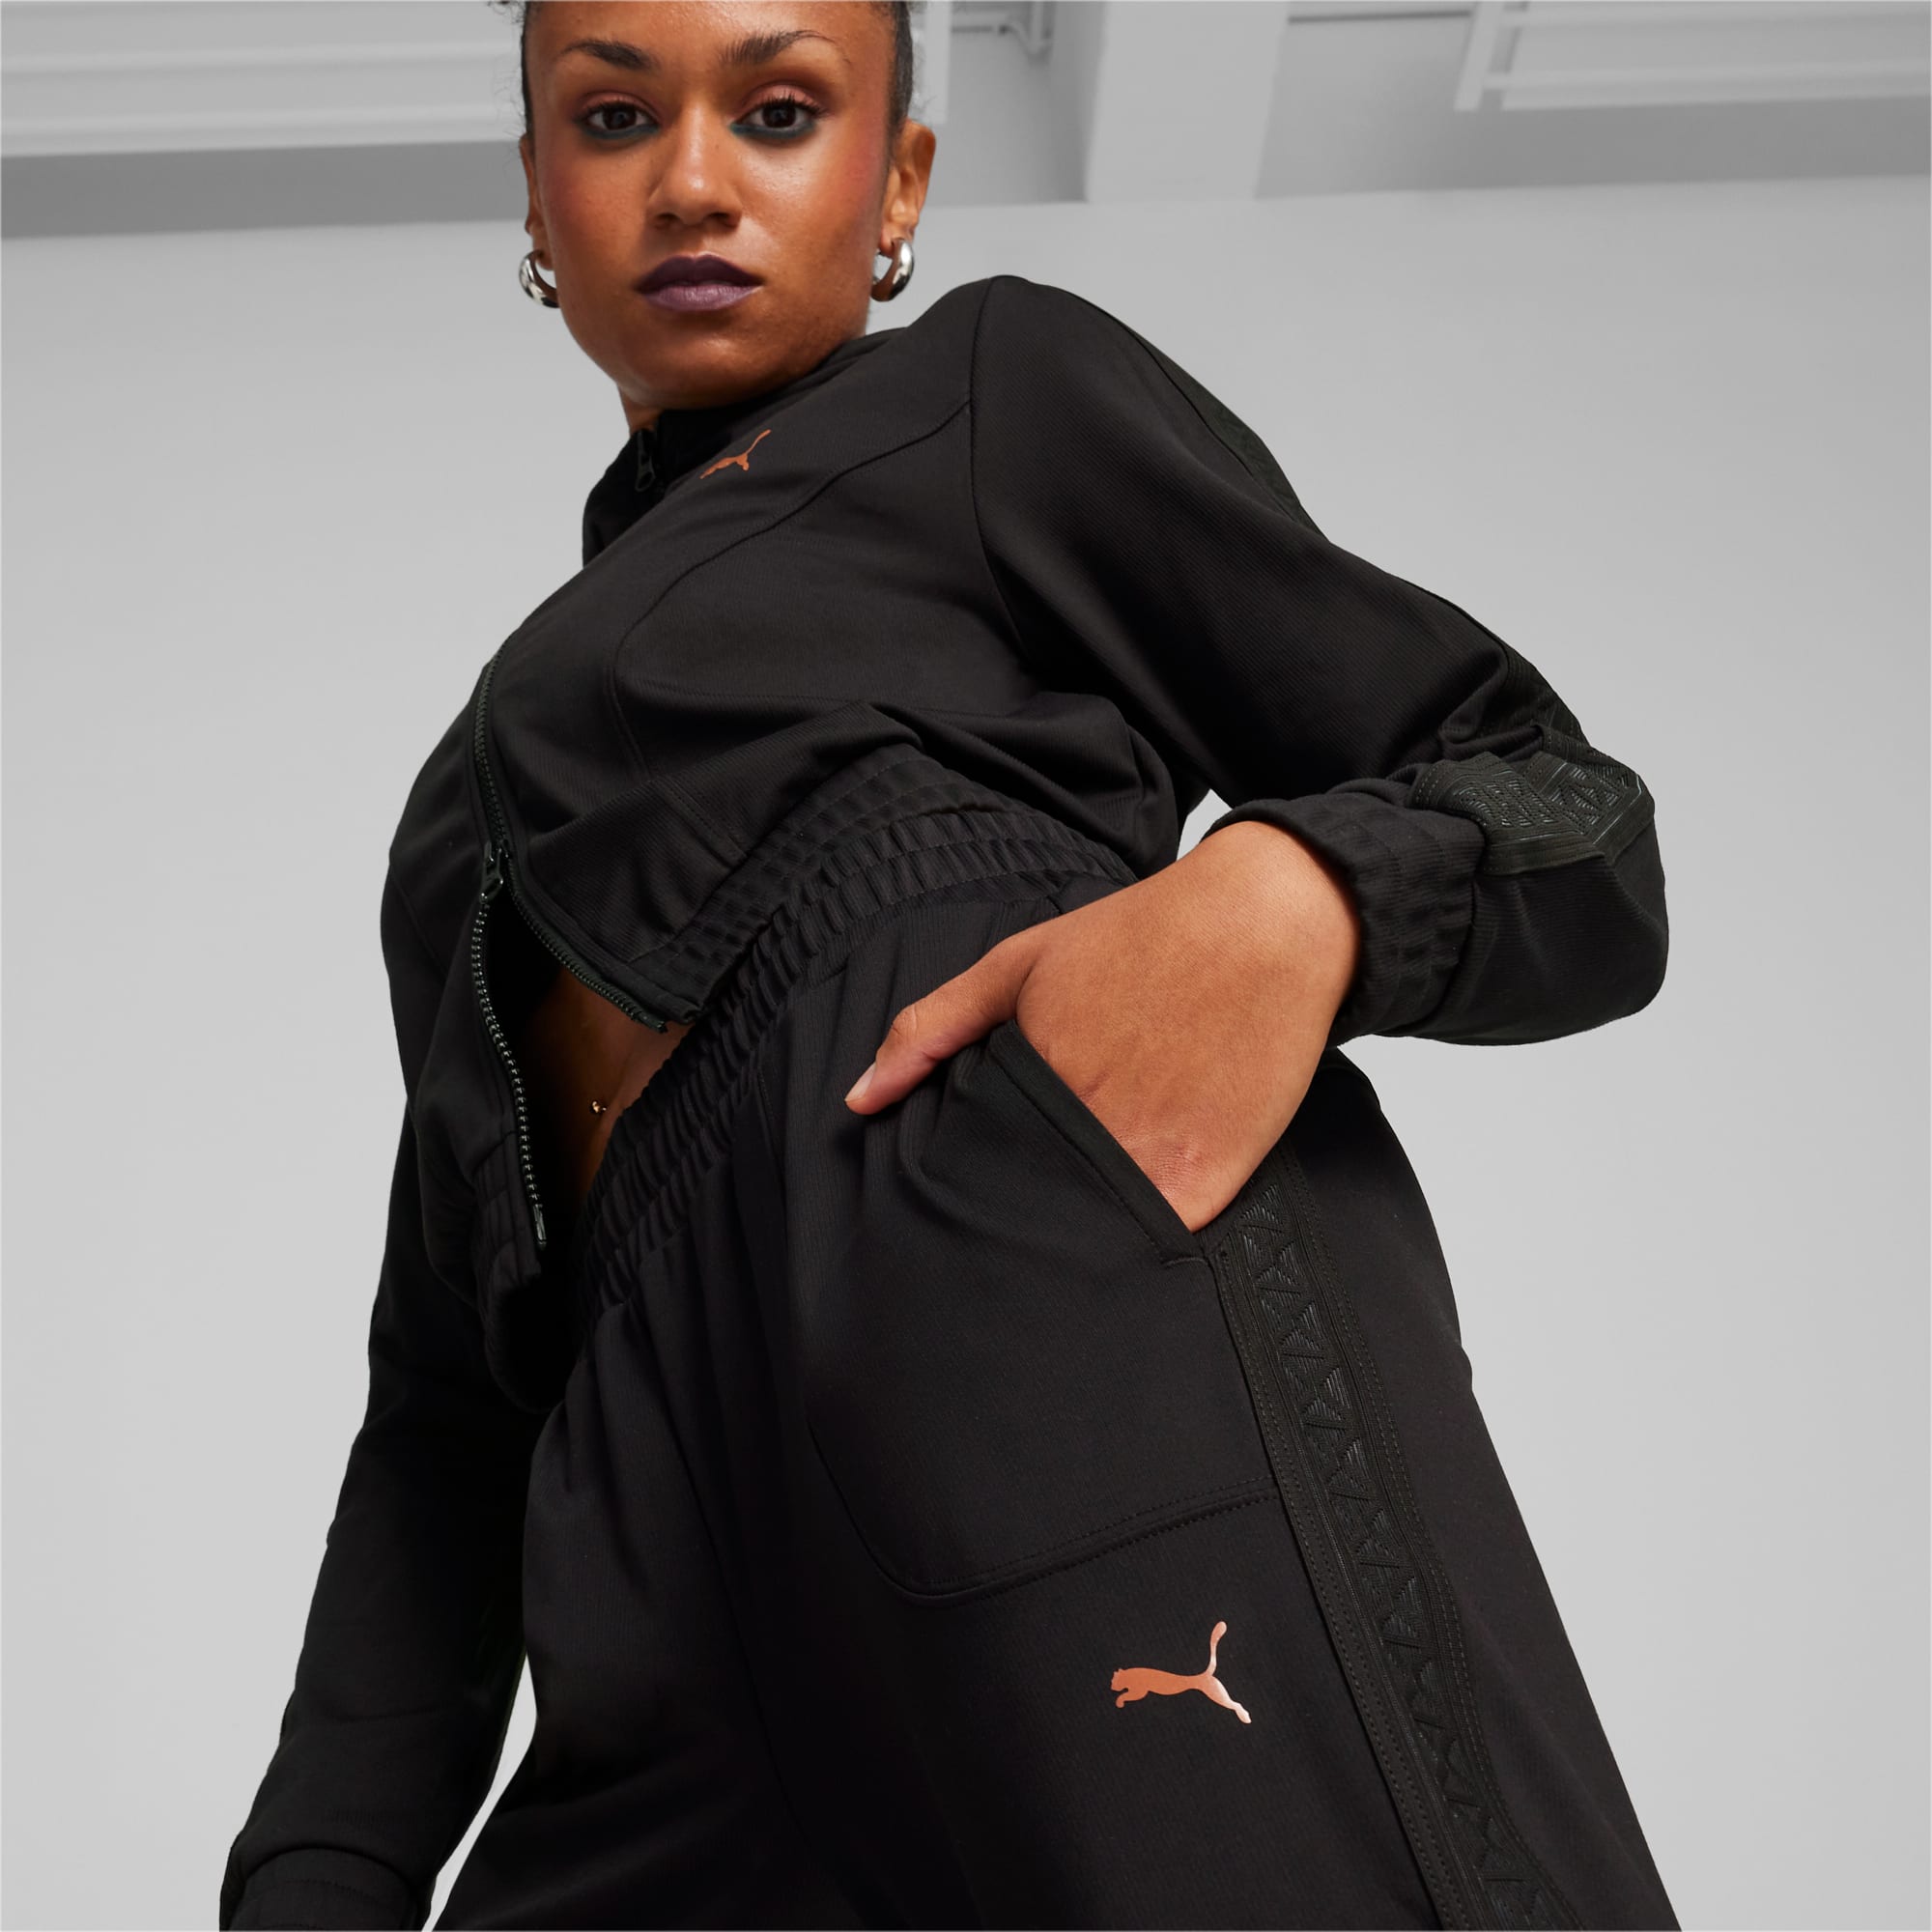 PUMA X Pamela Reif Women's Tapered Sweatpants, Black, Size XXS, Clothing